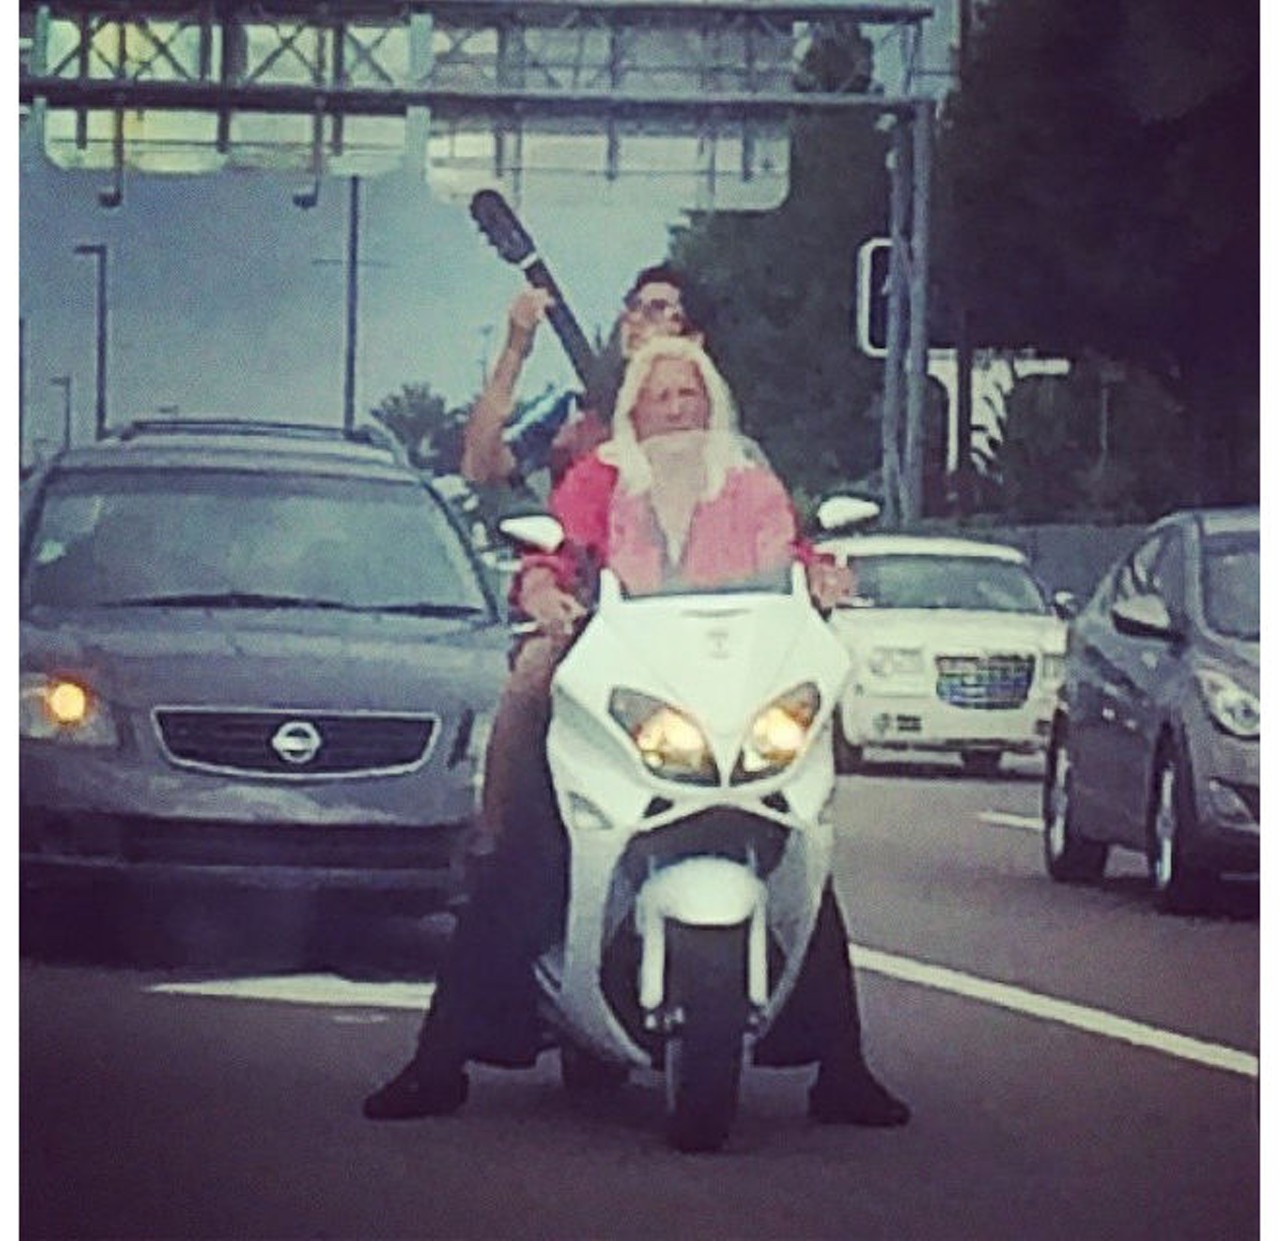 #onlyinorlando will you find this guitar-playing scooter passenger.Instagram: koolkatkirstie